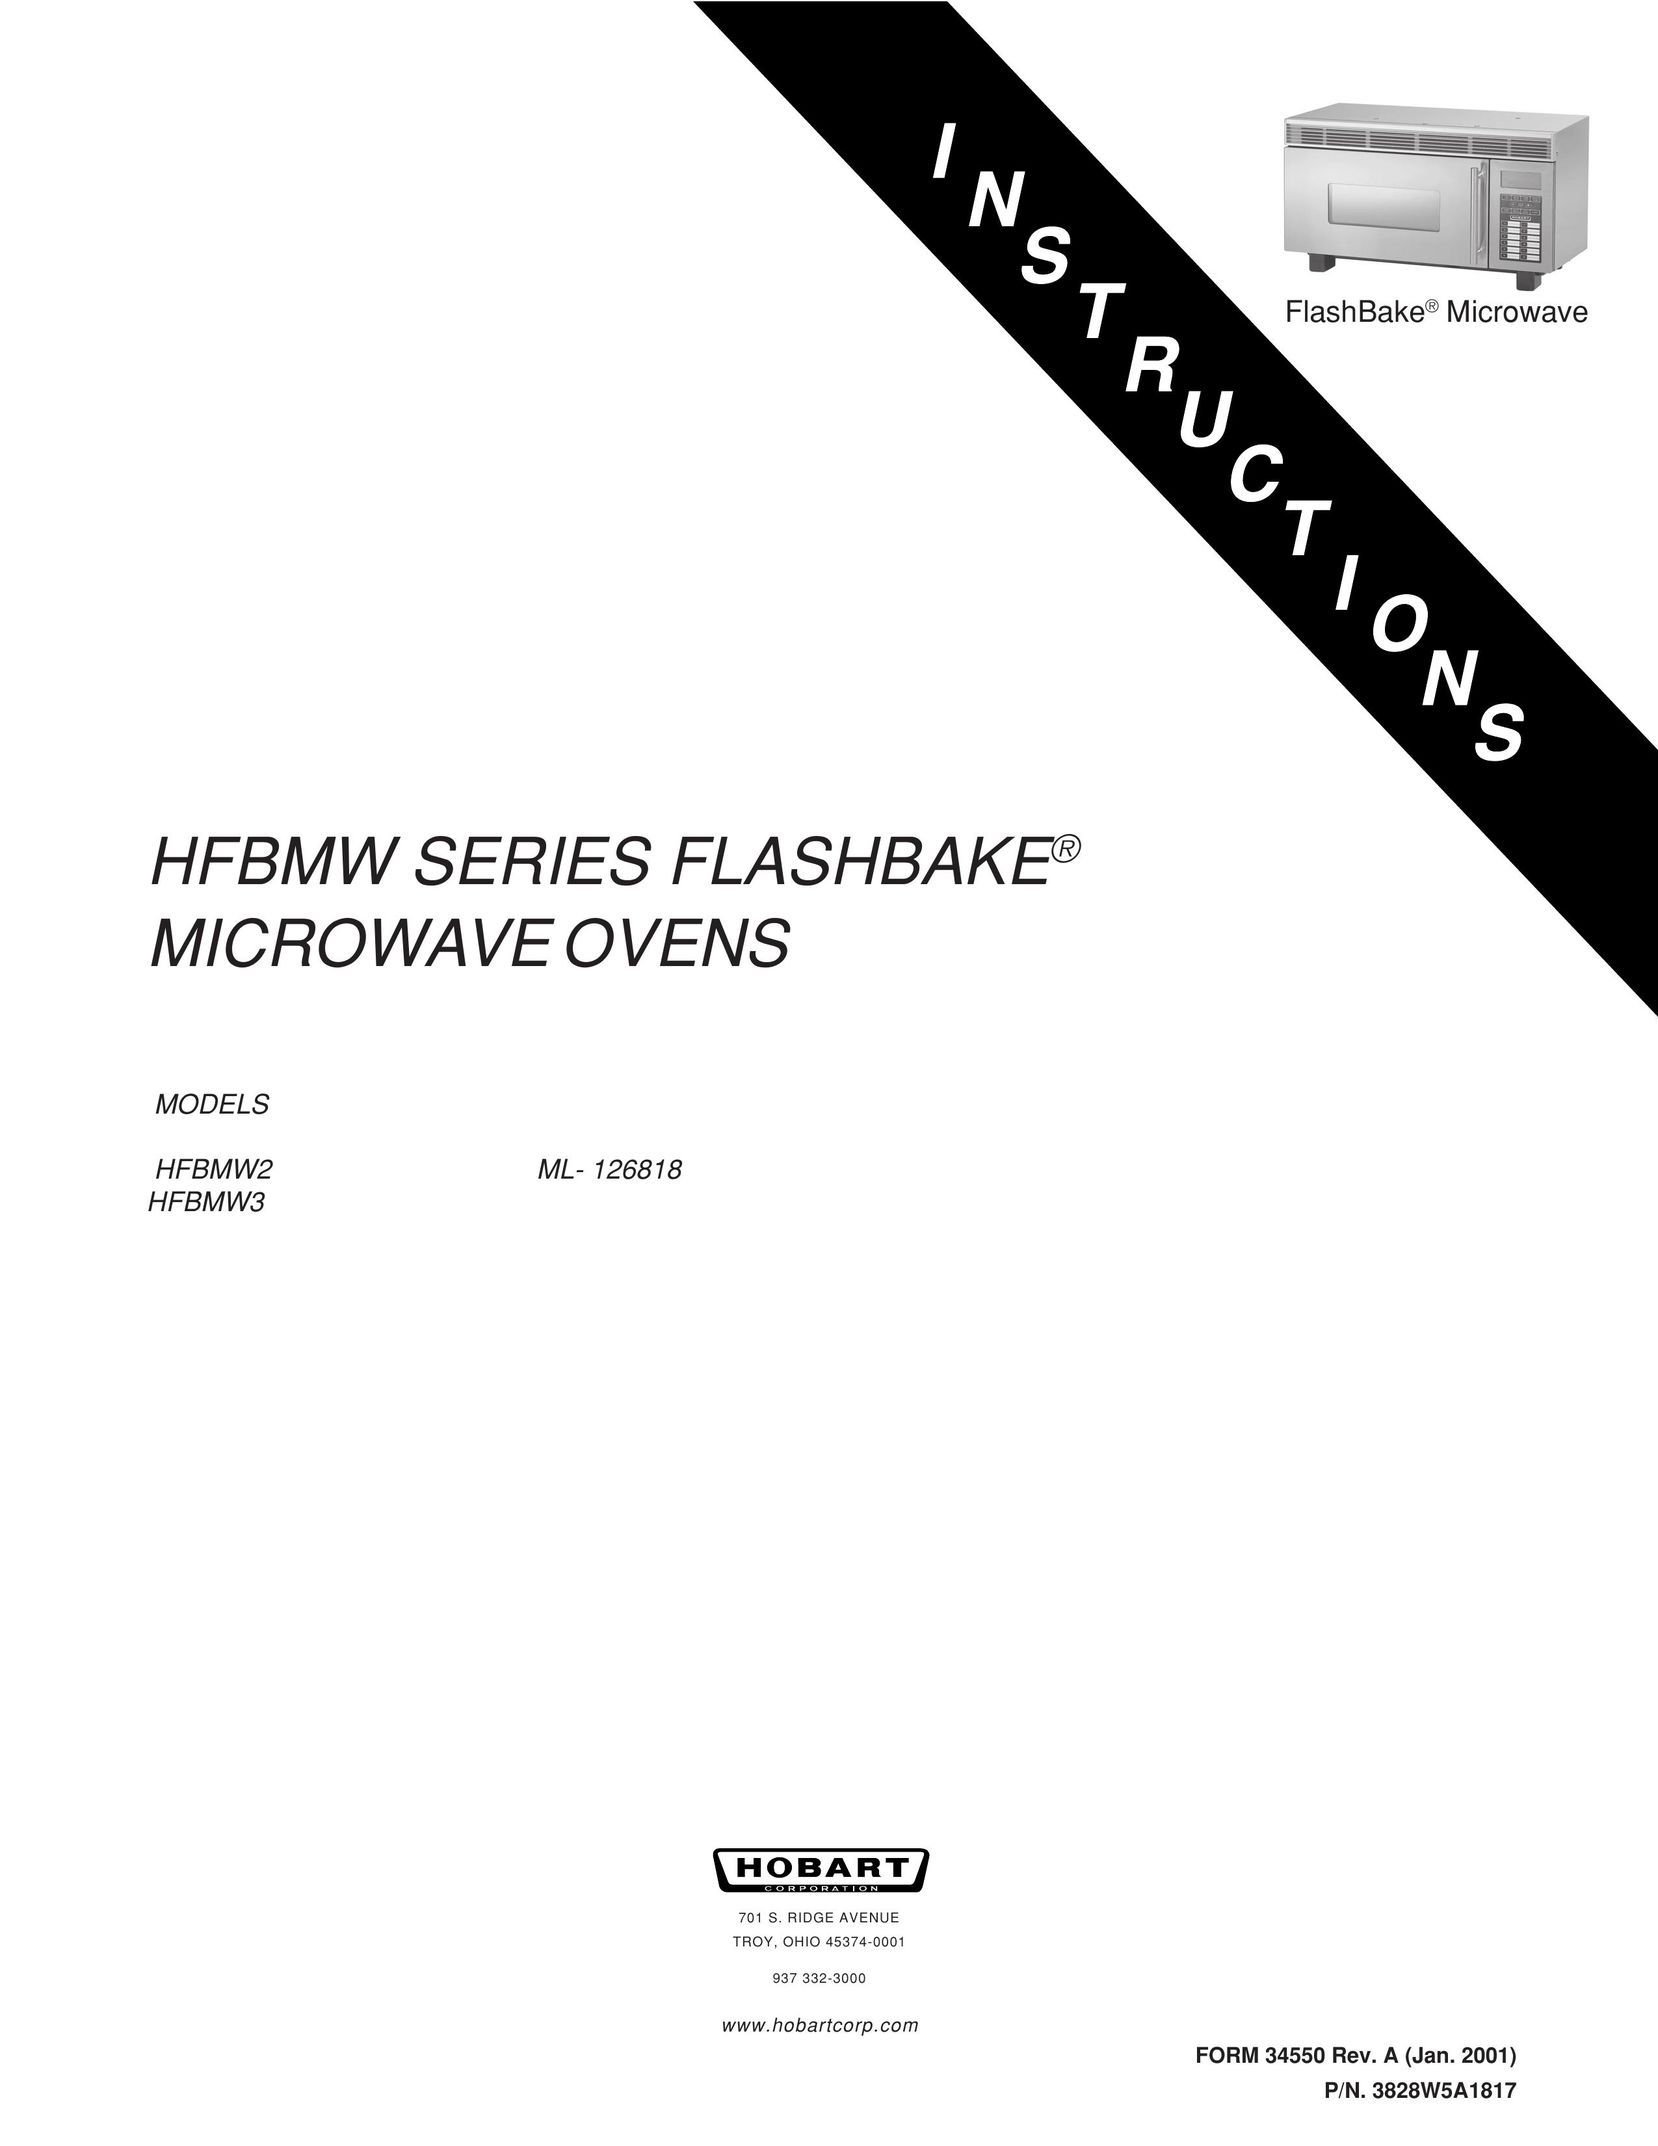 Hobart HFBMW3 Microwave Oven User Manual